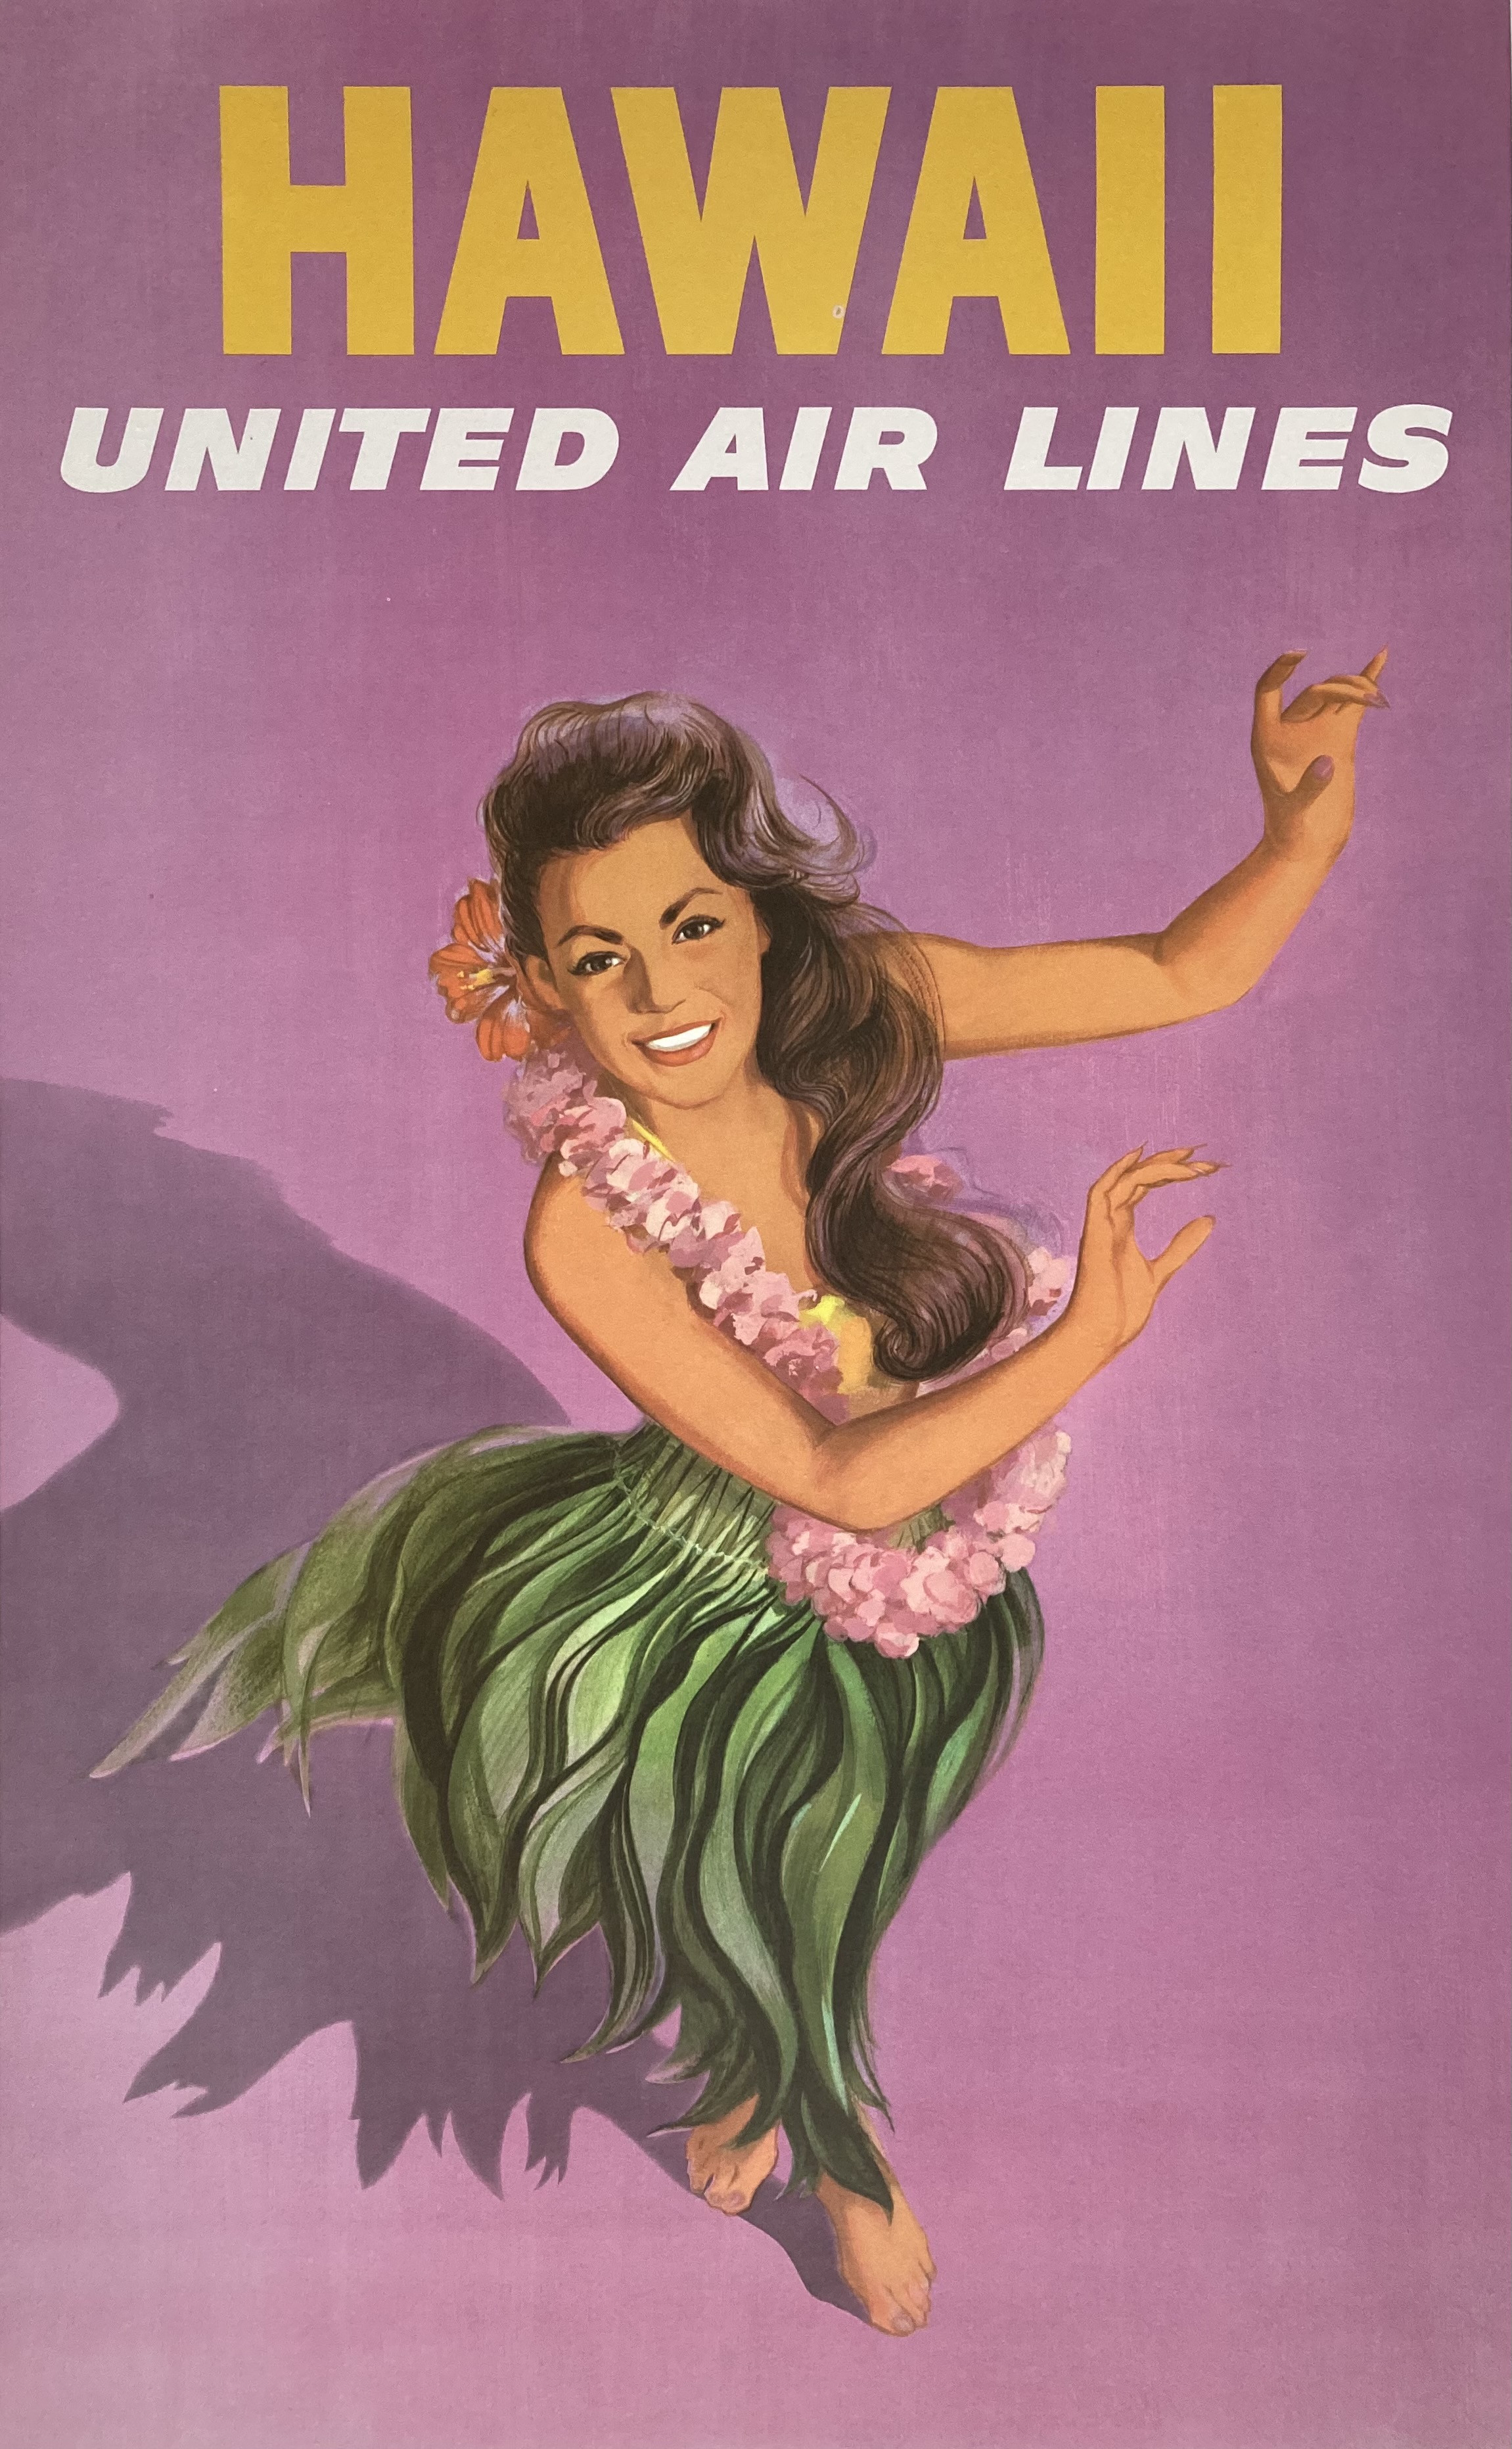 L'Isle Adam Beach Paris France Vintage French Travel Advertisement Poster Print 